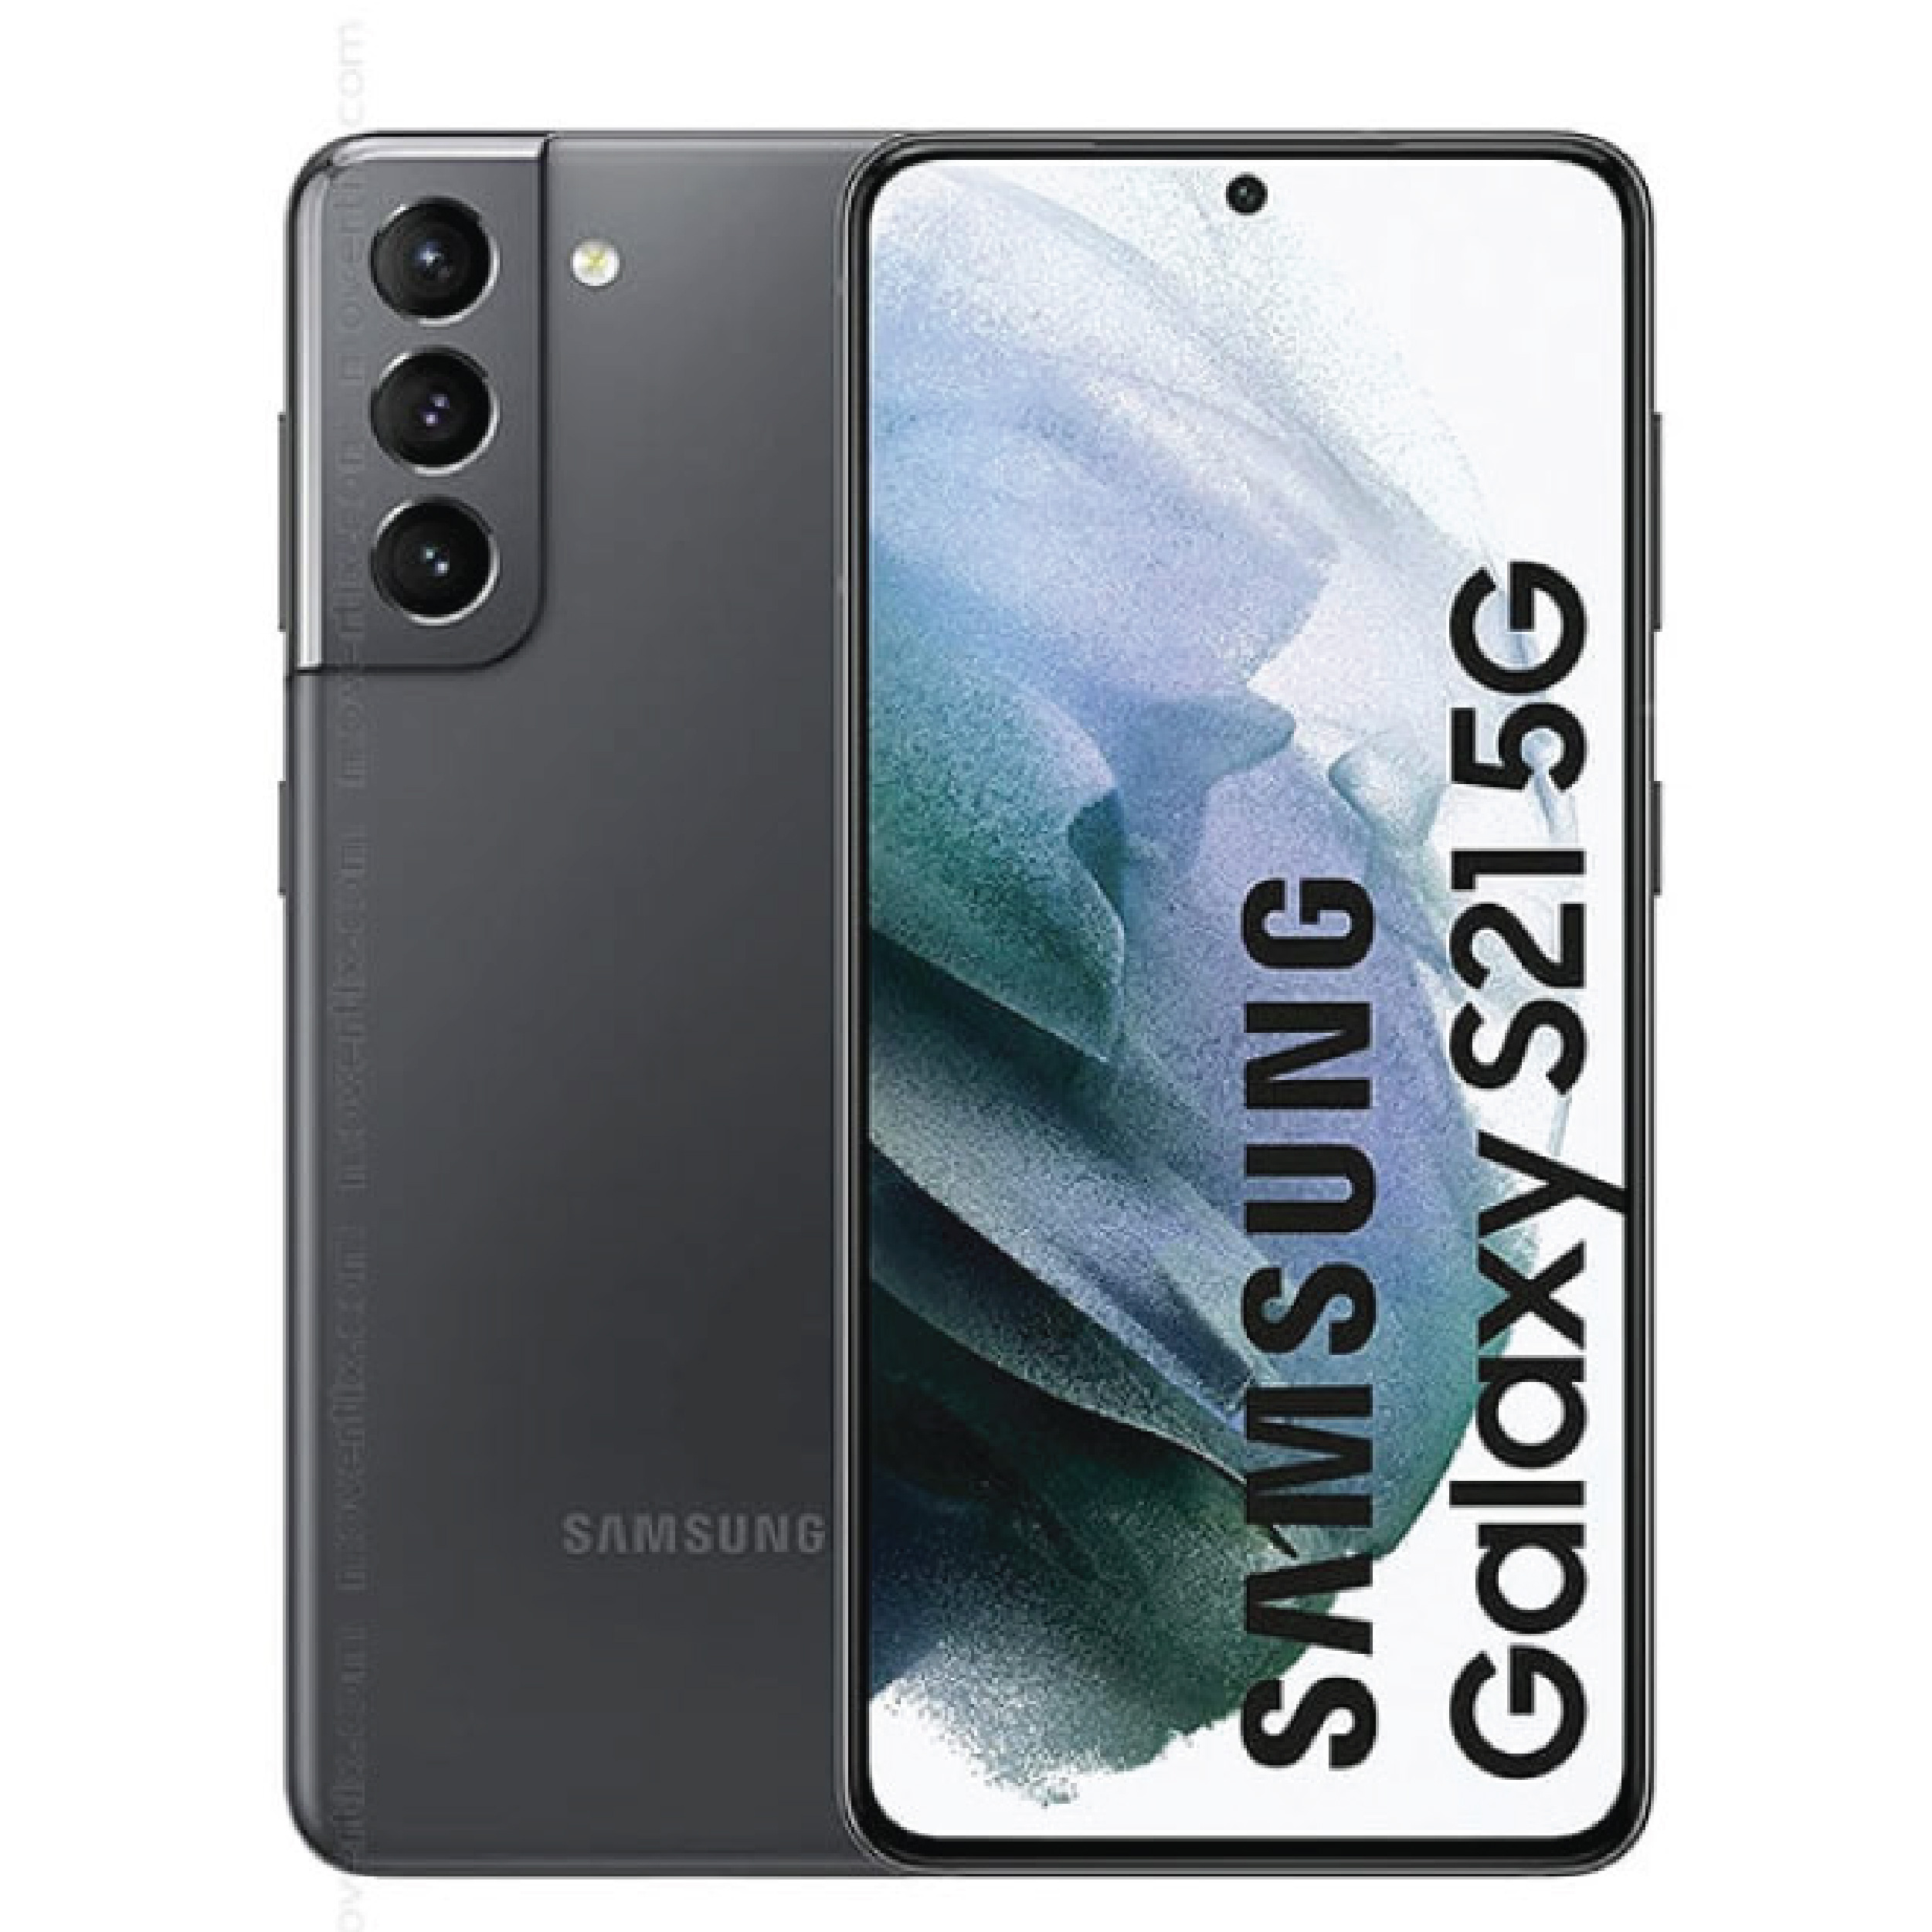 Samsung Galaxy S22 5G Price in Kenya